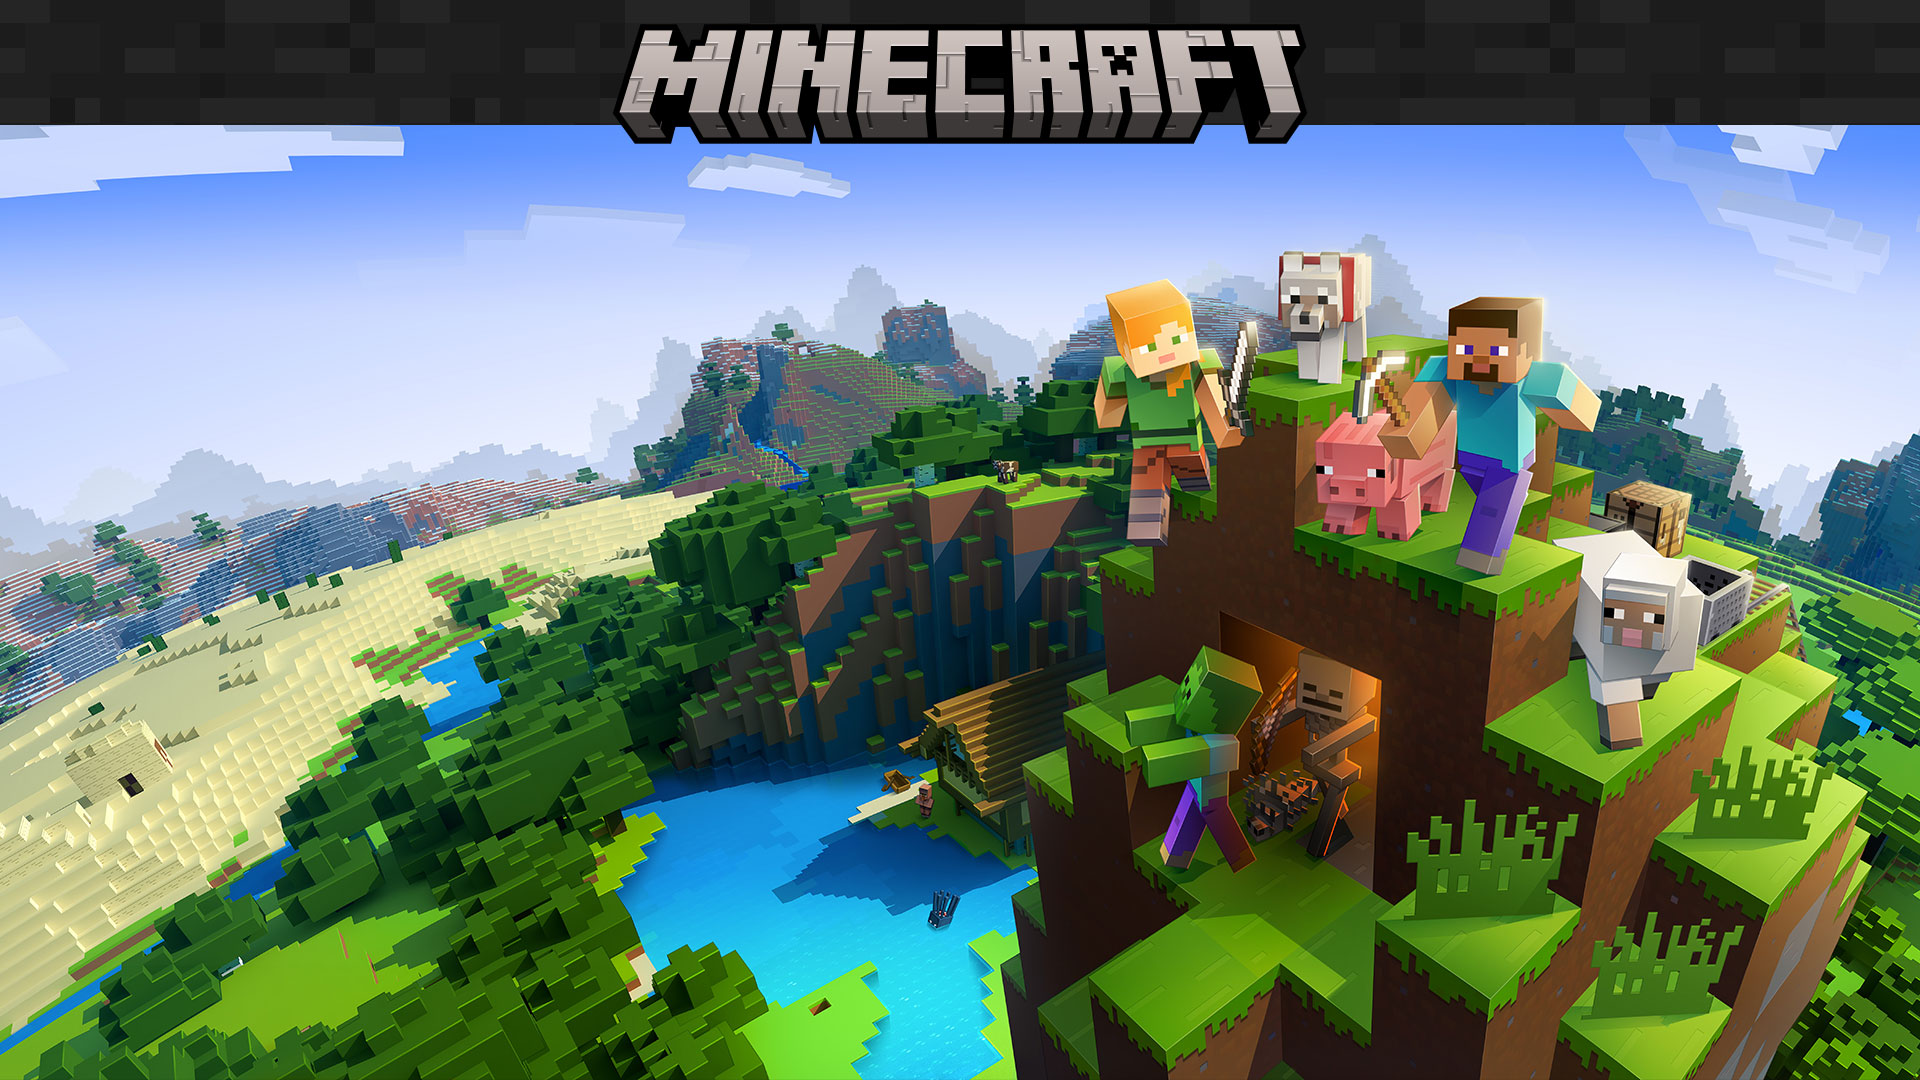 Minecraft logo met game karakters in omgeving met blokkenachtergrond